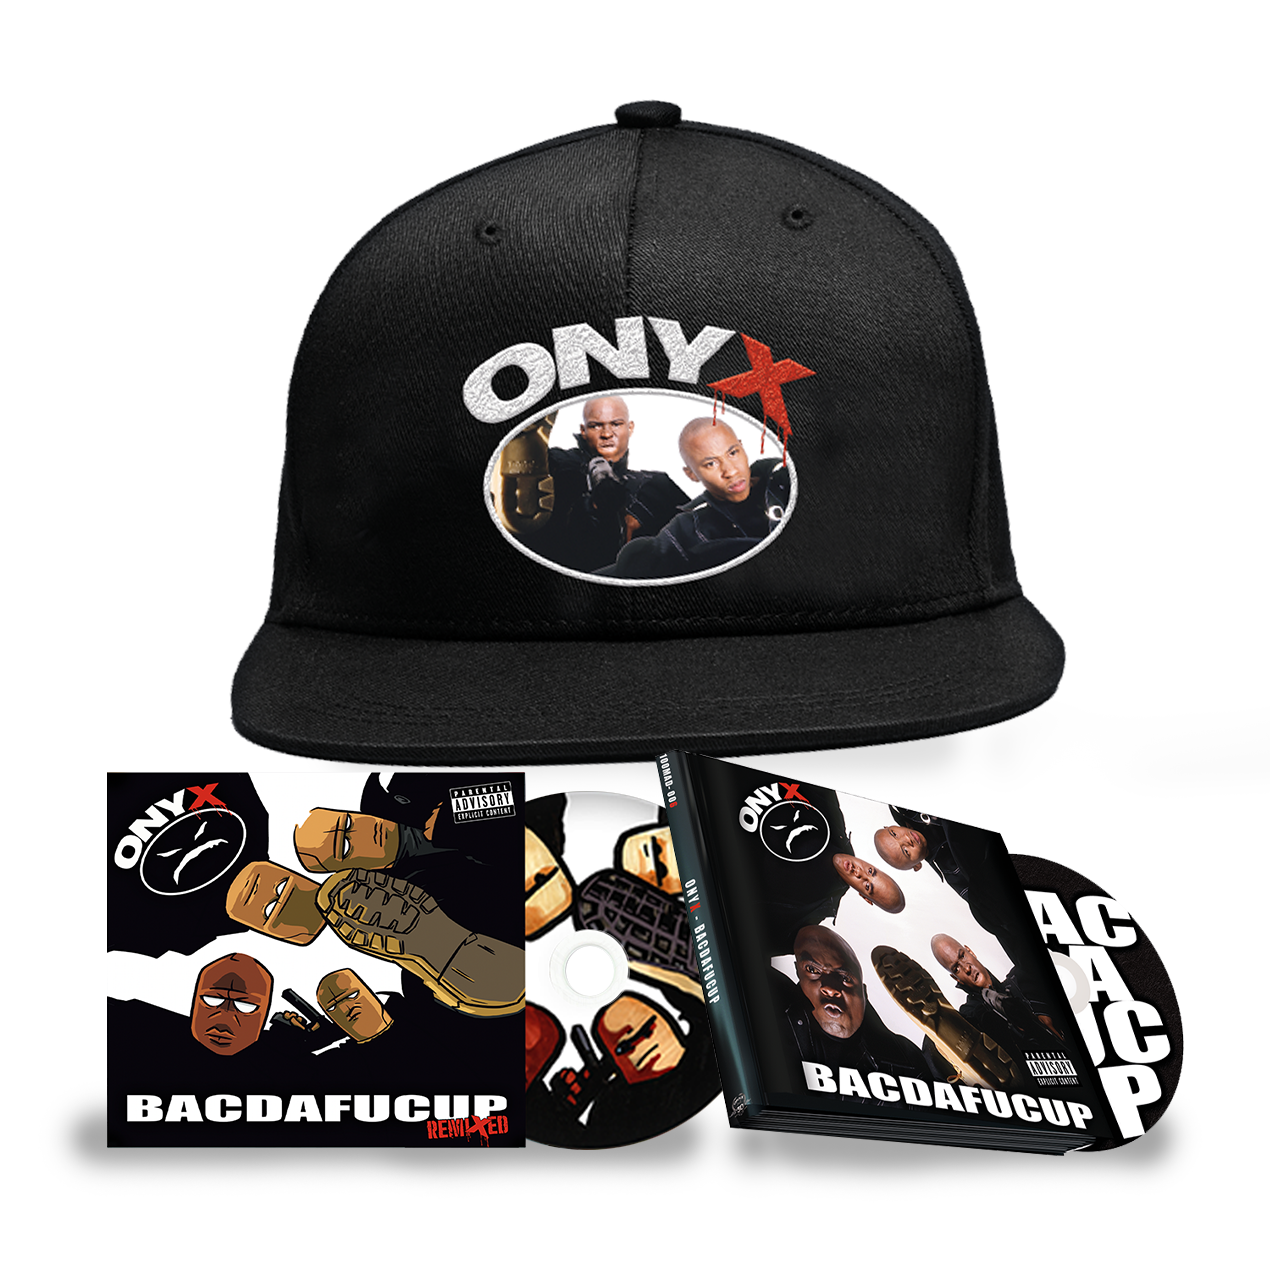 100 Mad CD & Onyx Shirt